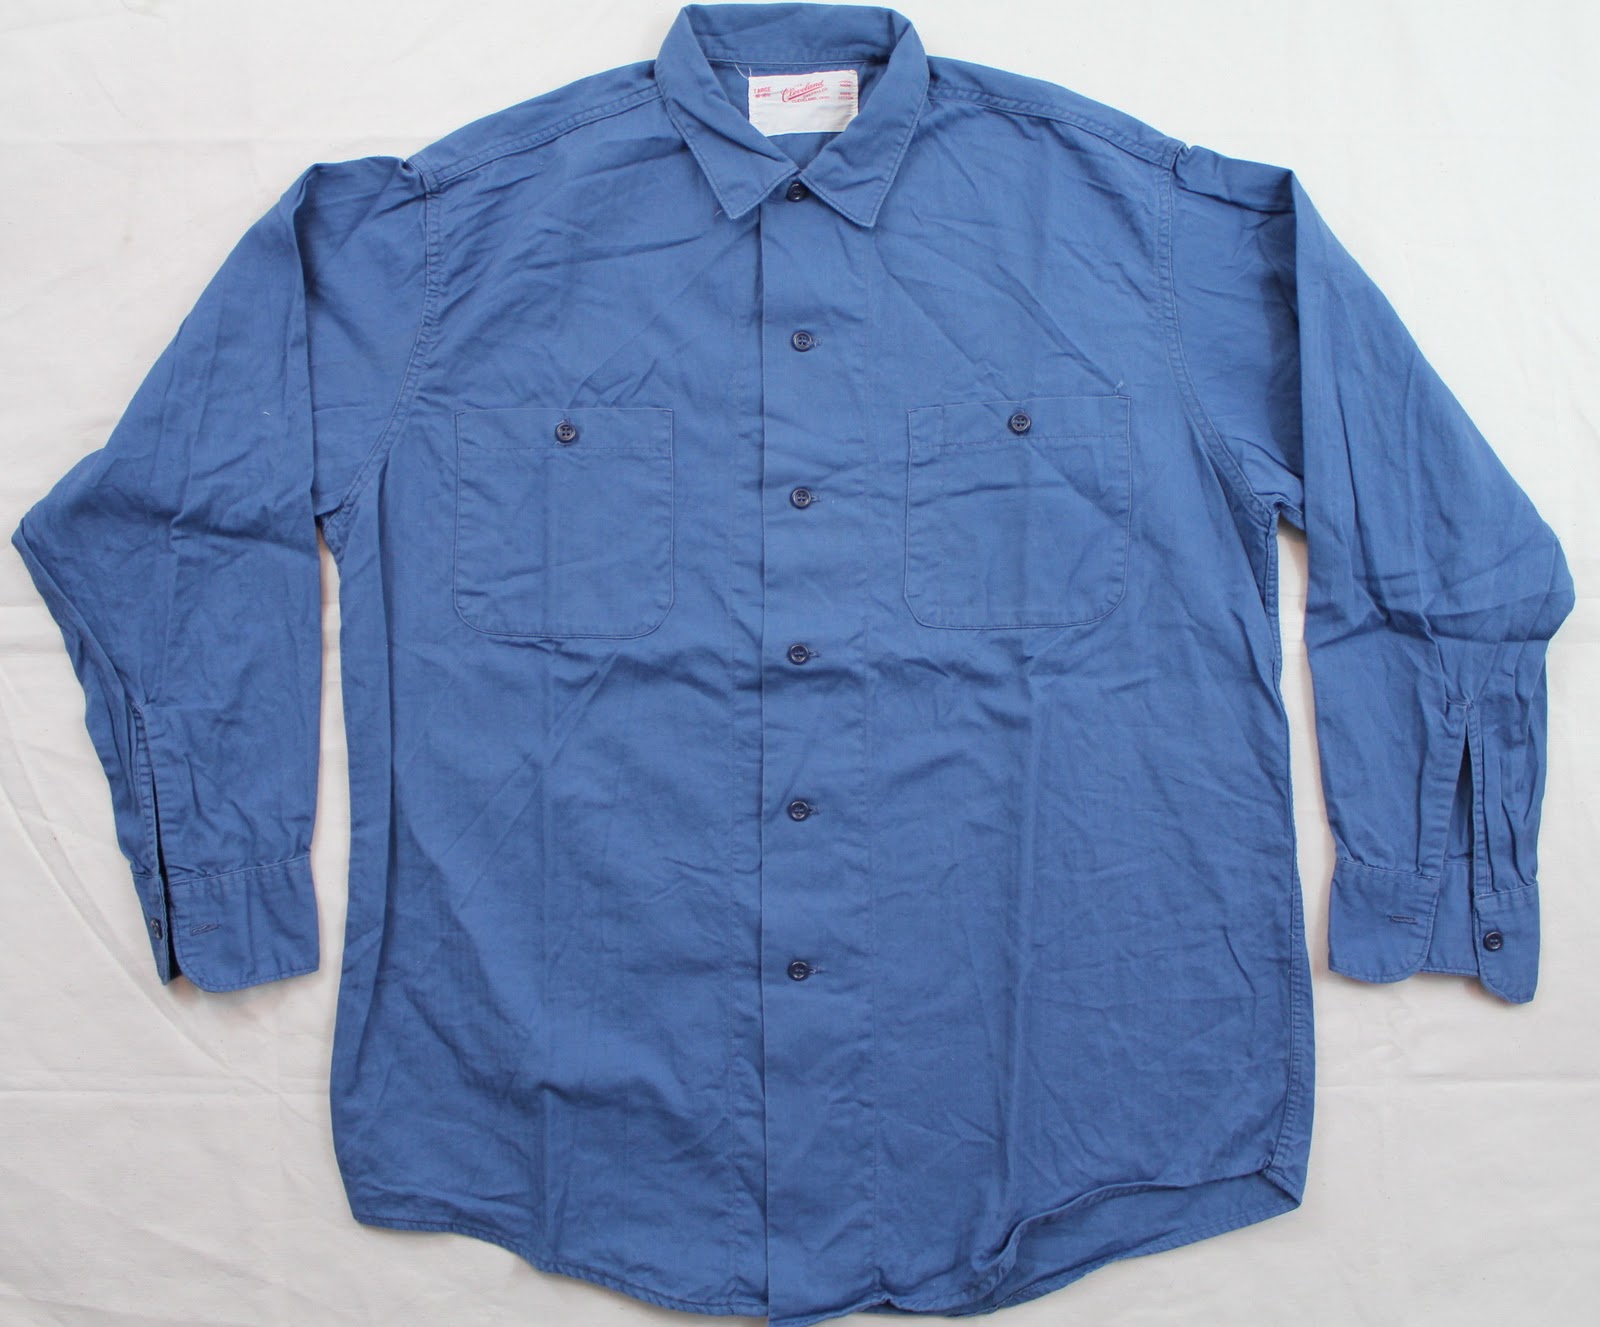 vintage workwear: 1940's-1950's era Blue Herringbone Twill Work Shirts